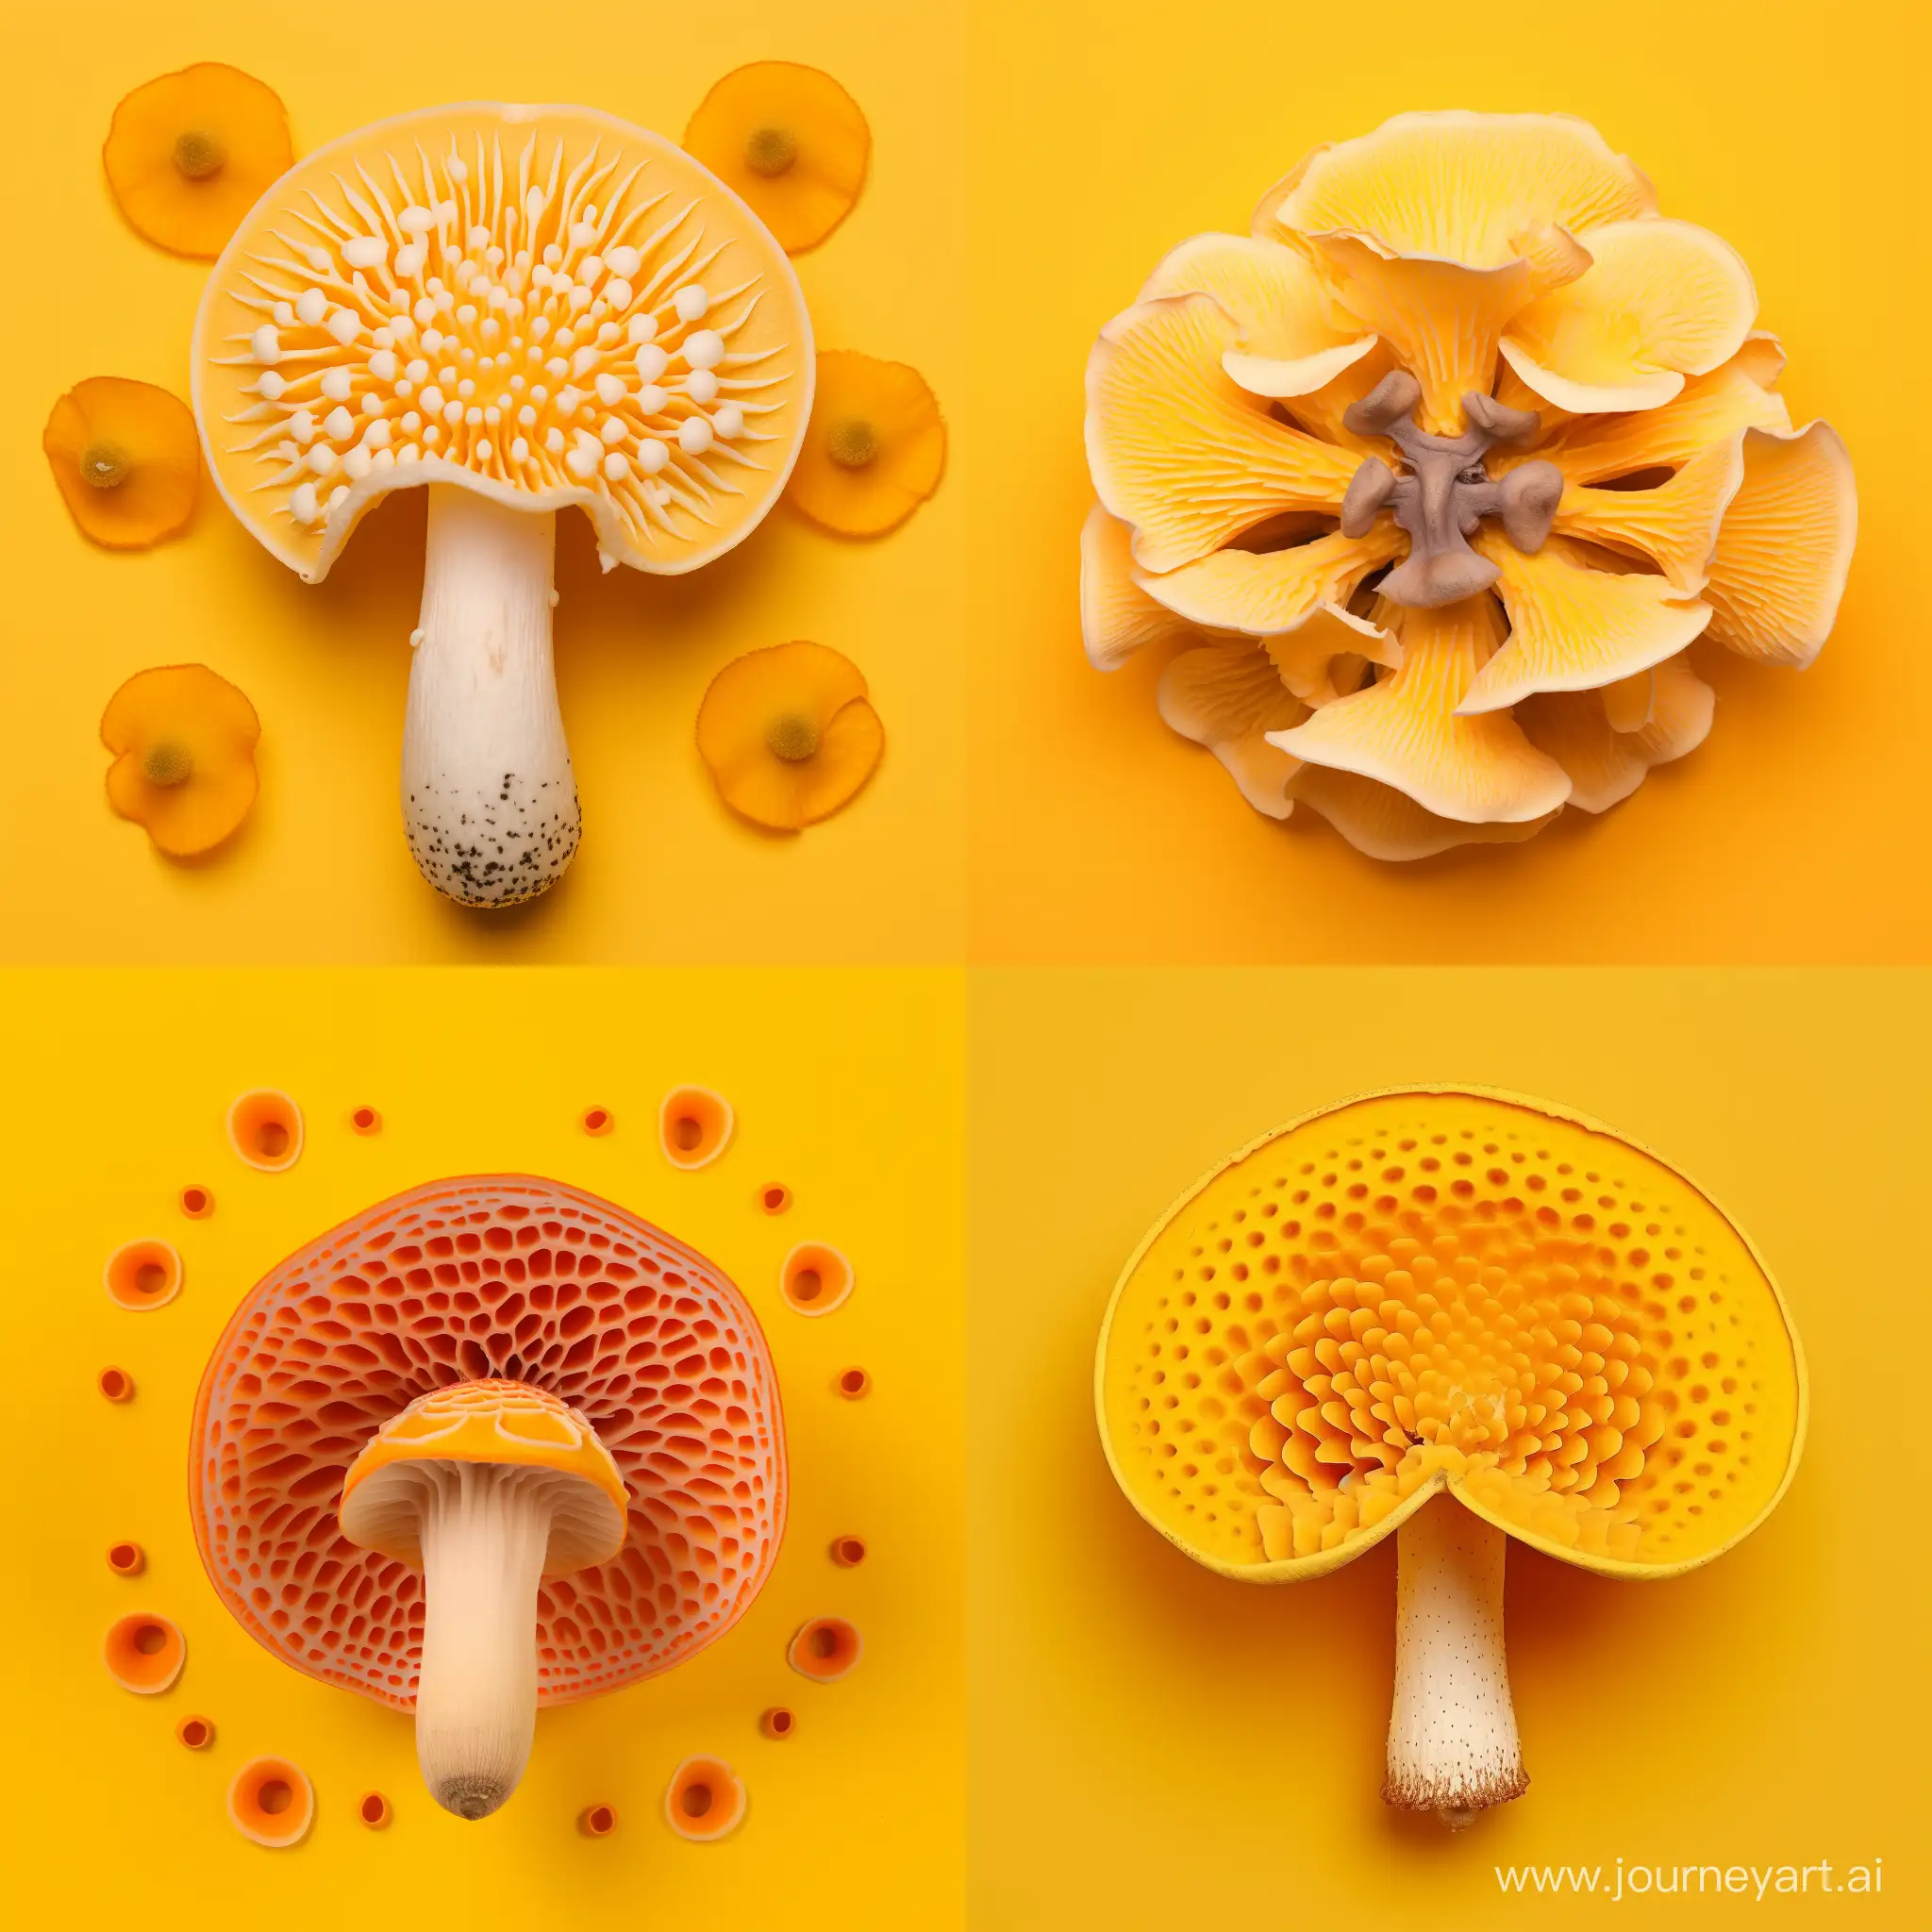 Amanita-Muscaria-Mushroom-Vibrant-SplitToned-Isolation-on-Yellow-Background